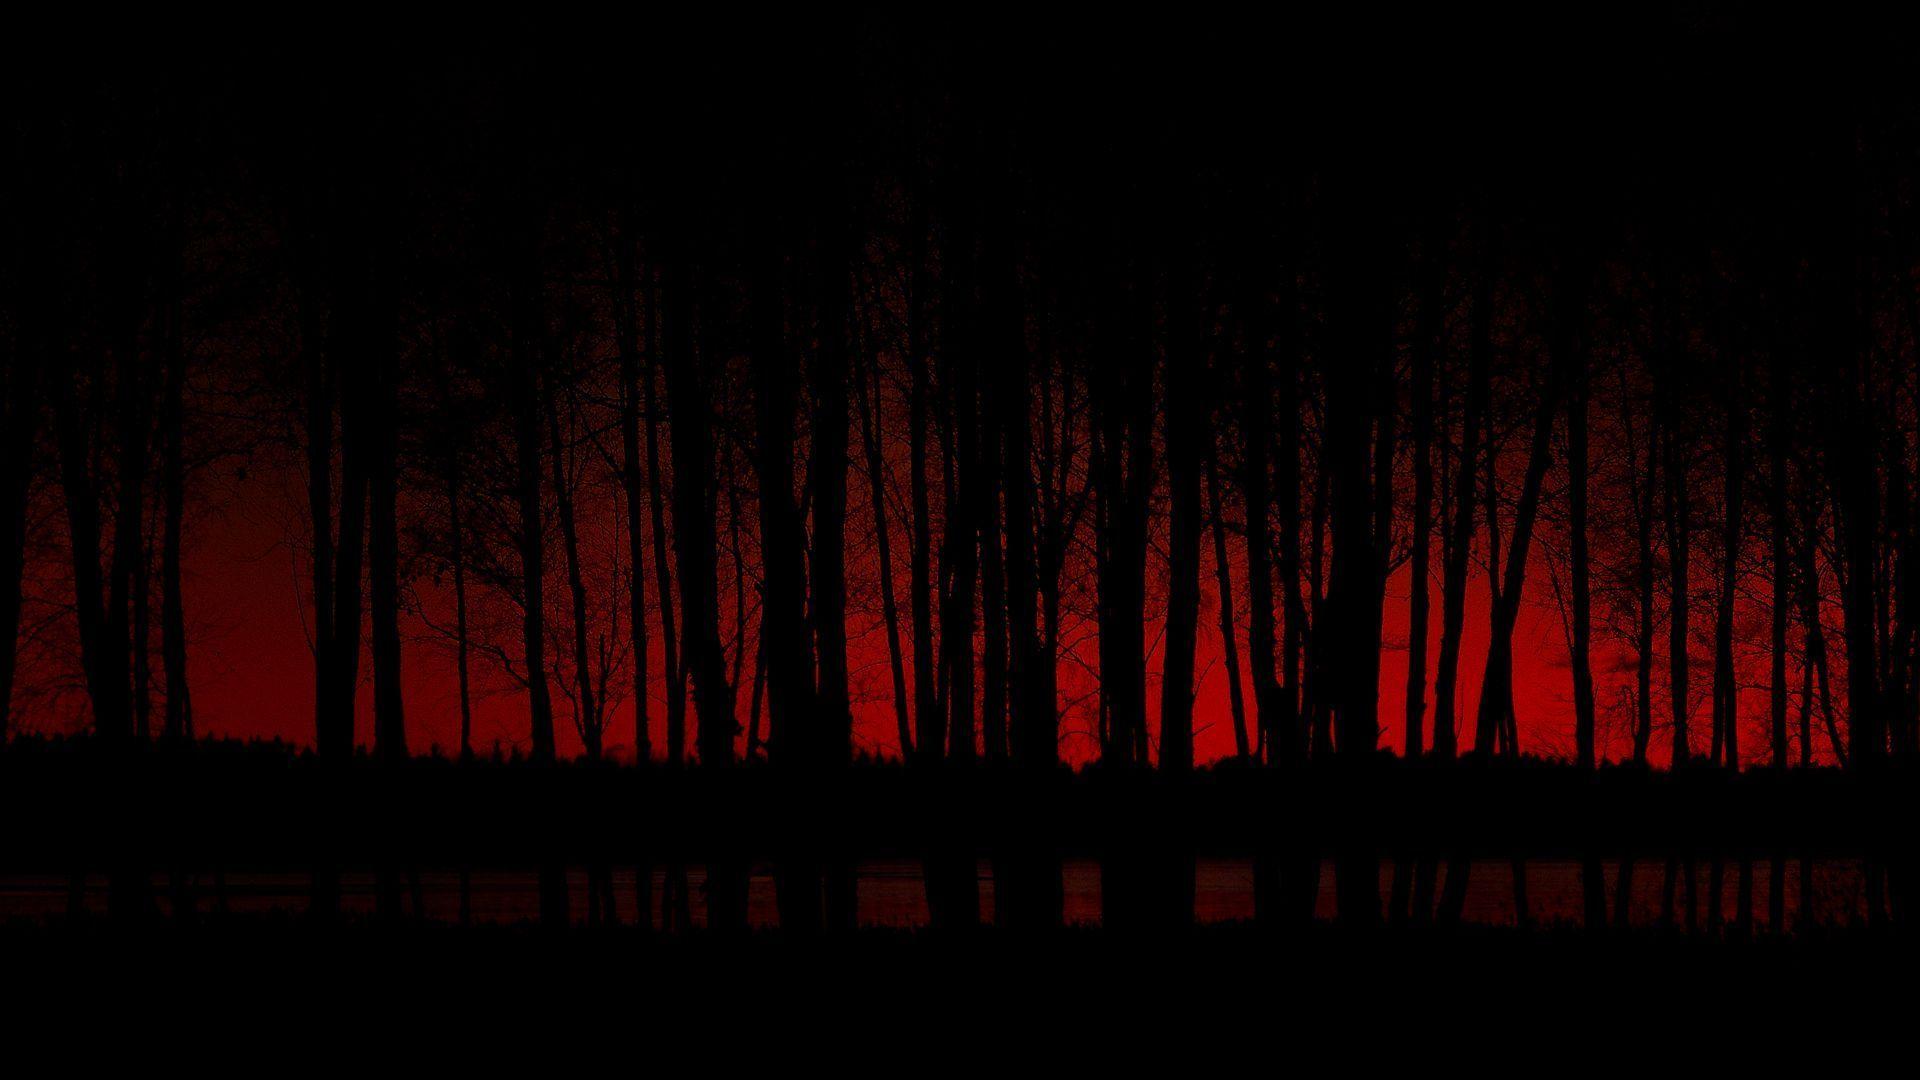 Dark Forest 31 392279 High Definition Wallpaper. wallalay